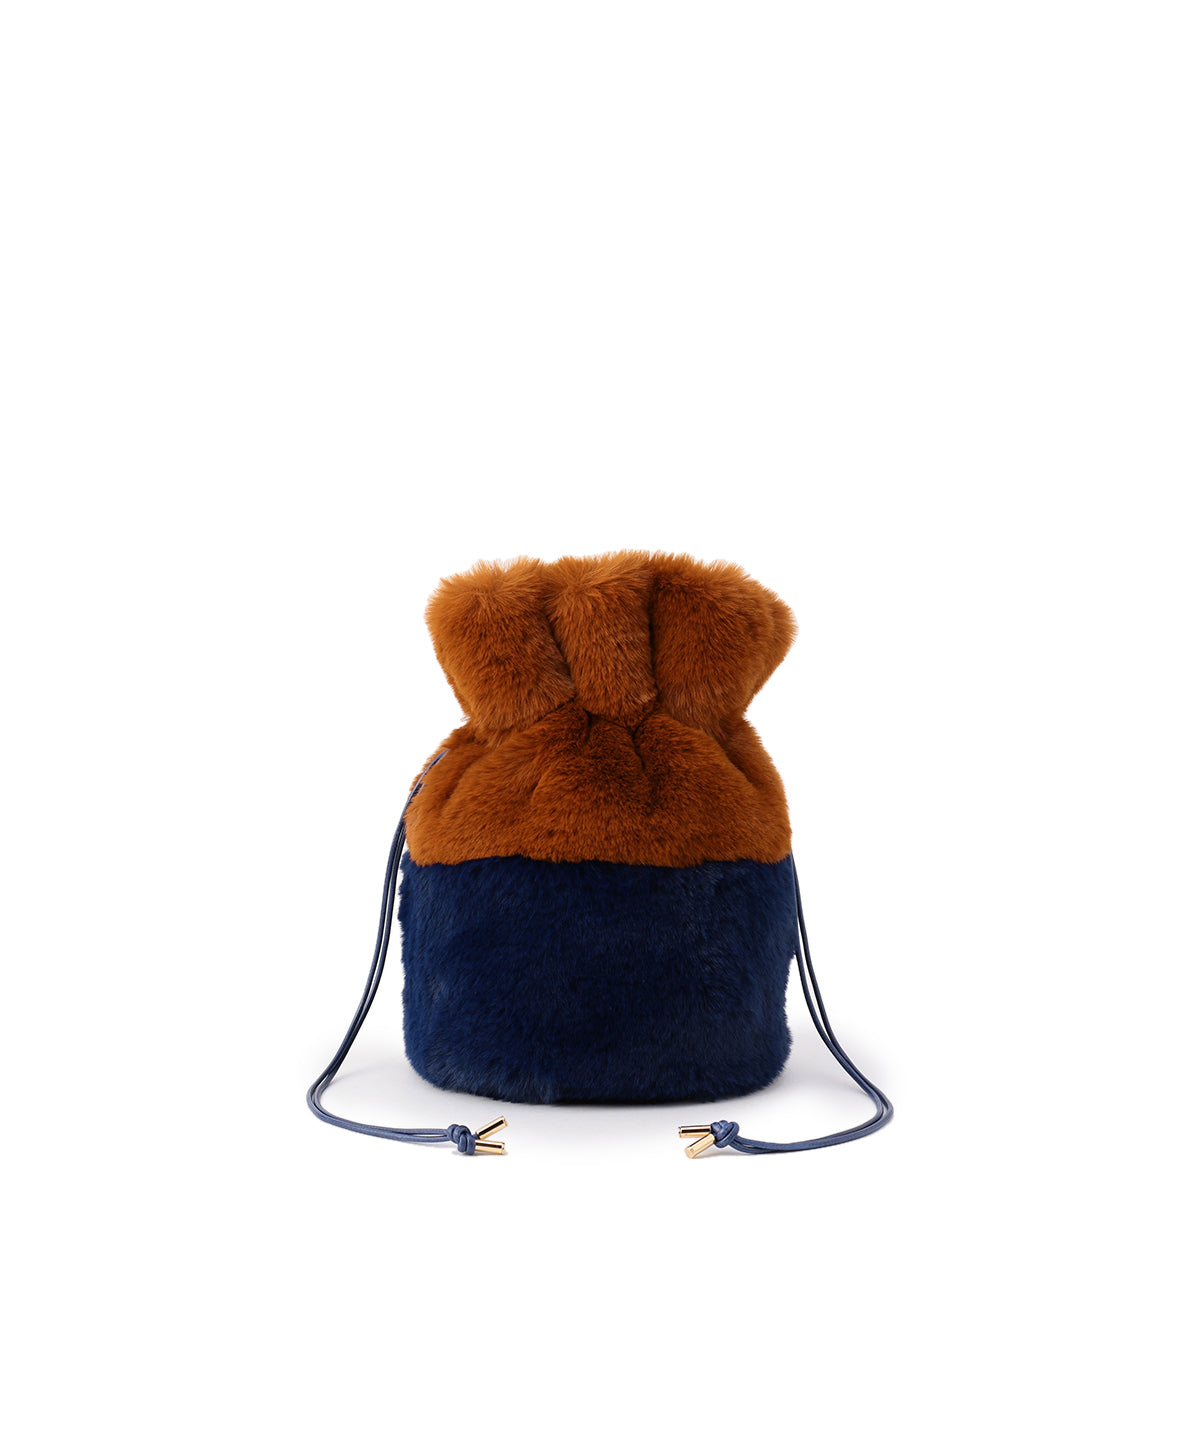 Eco Fur Drawstring Bag (Small) BROWN×NAVY